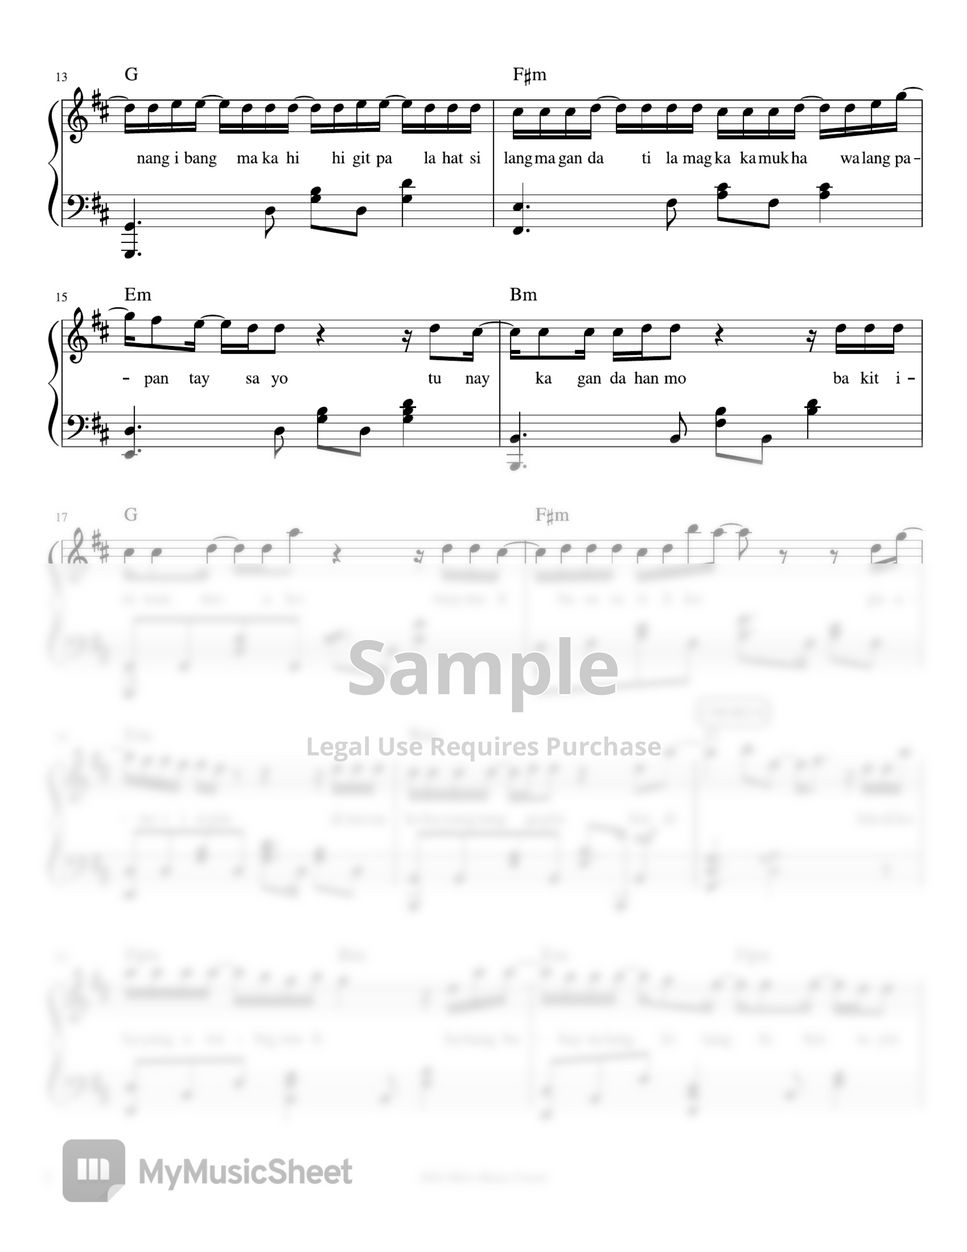 Ace Banzuelo - Muli (piano sheet music) by Mel's Muic Corner